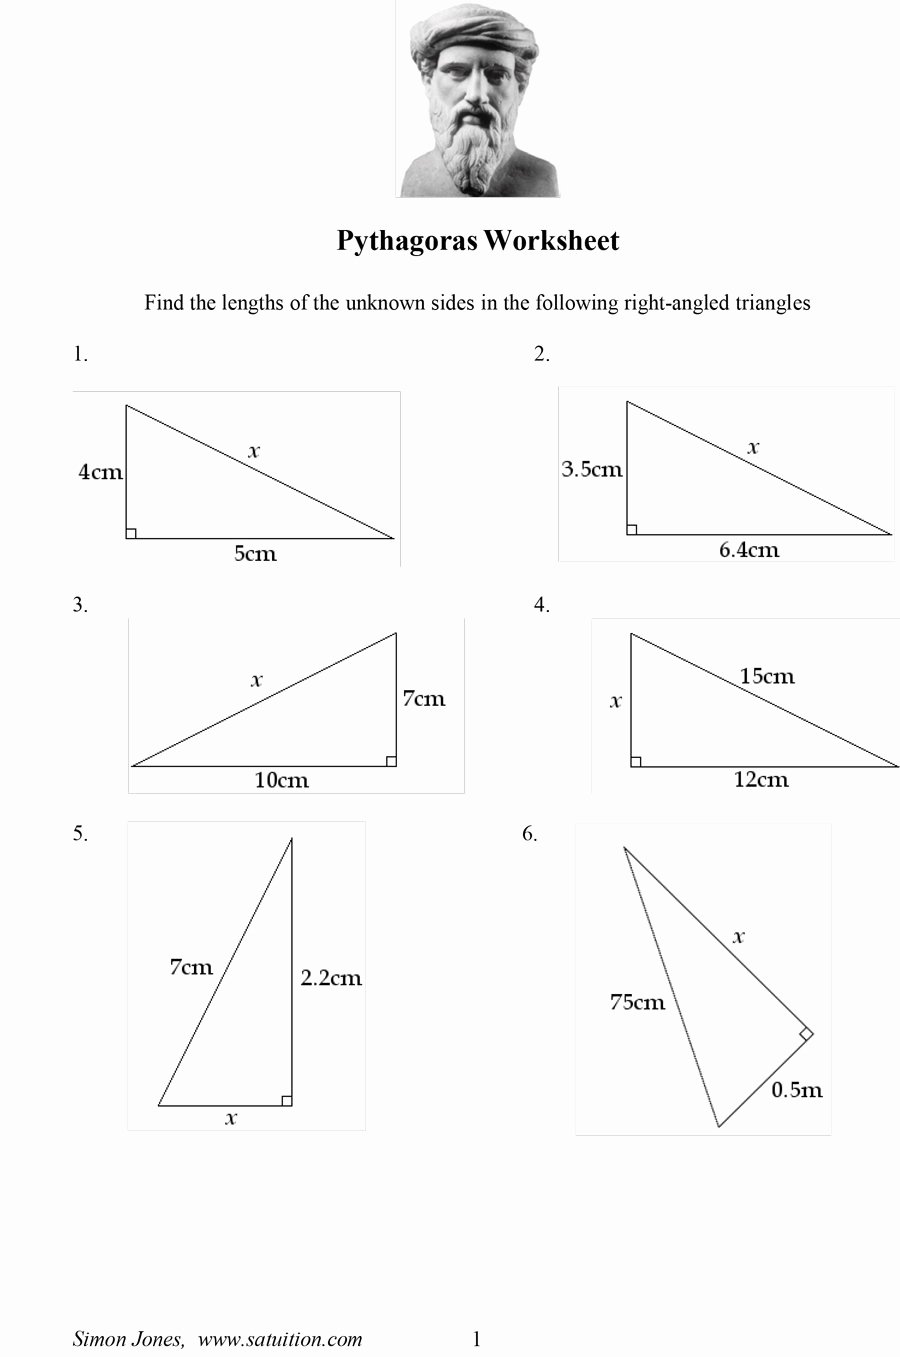 Pythagoras theorem Worksheet Pdf Unique 48 Pythagorean theorem Worksheet with Answers [word Pdf]